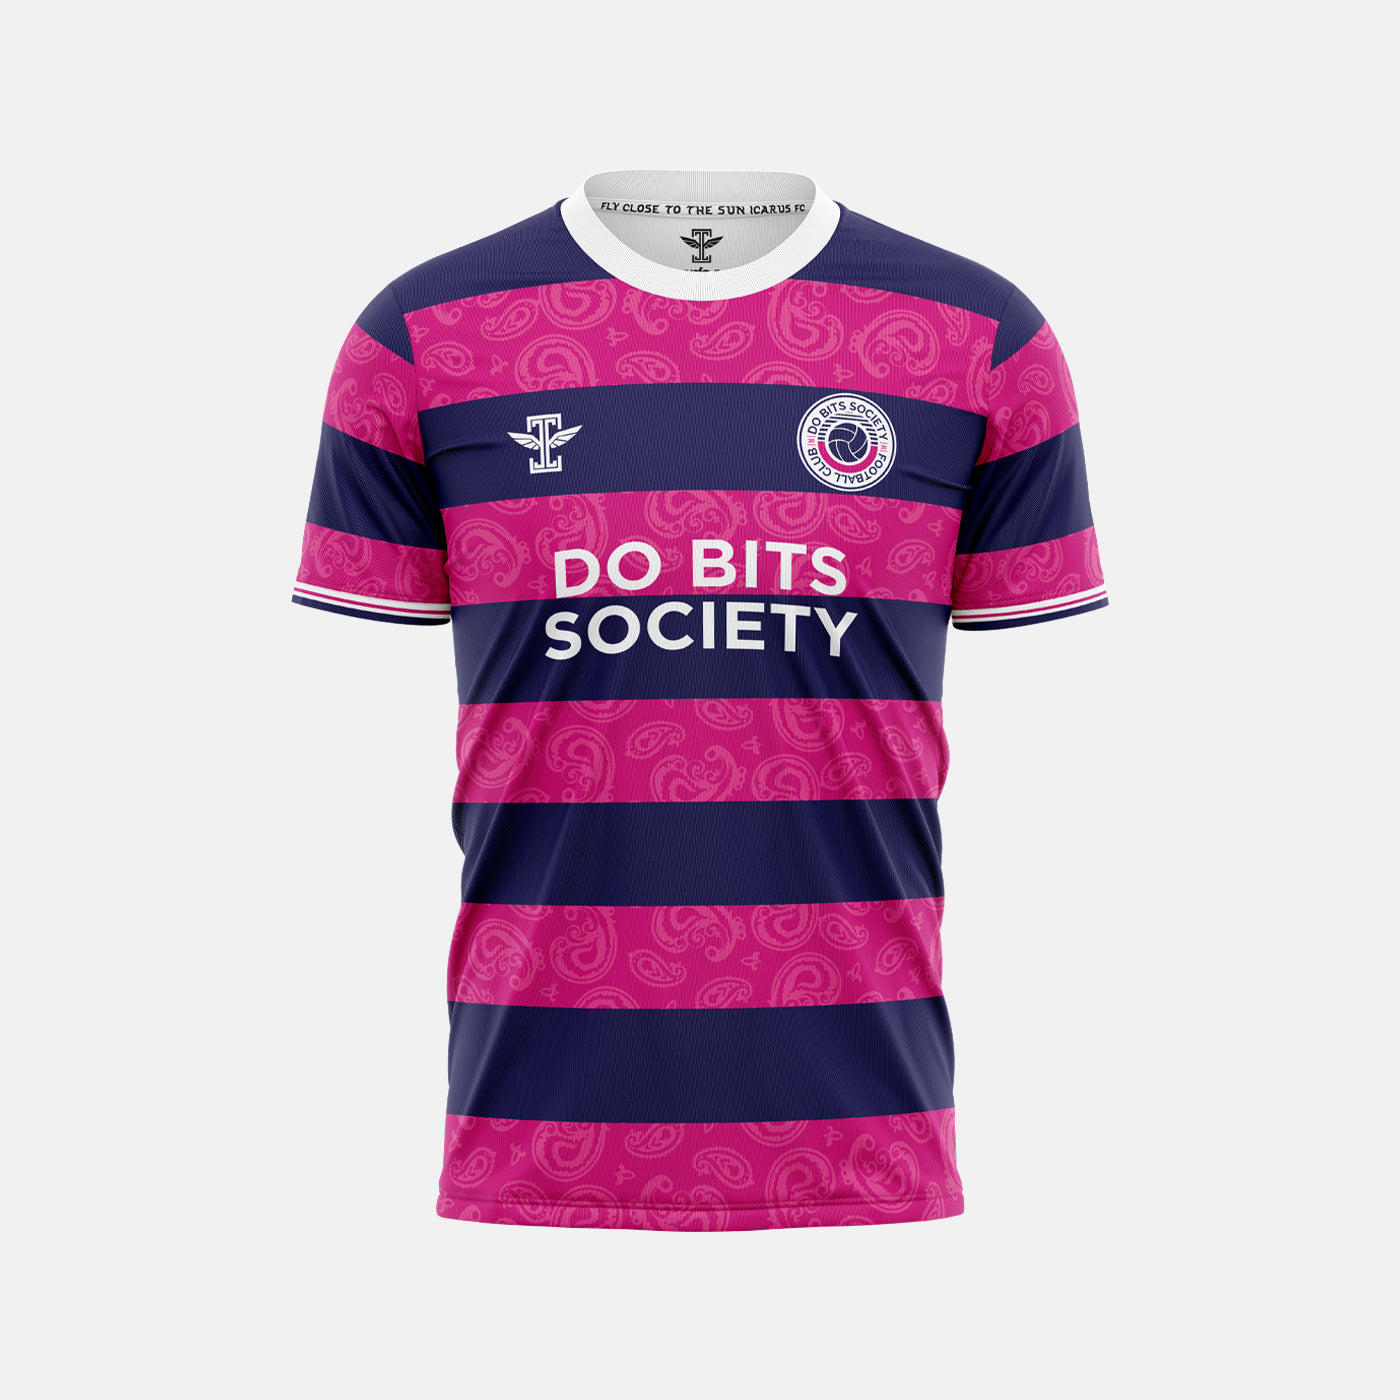 Do Bits Society FC Club Shop